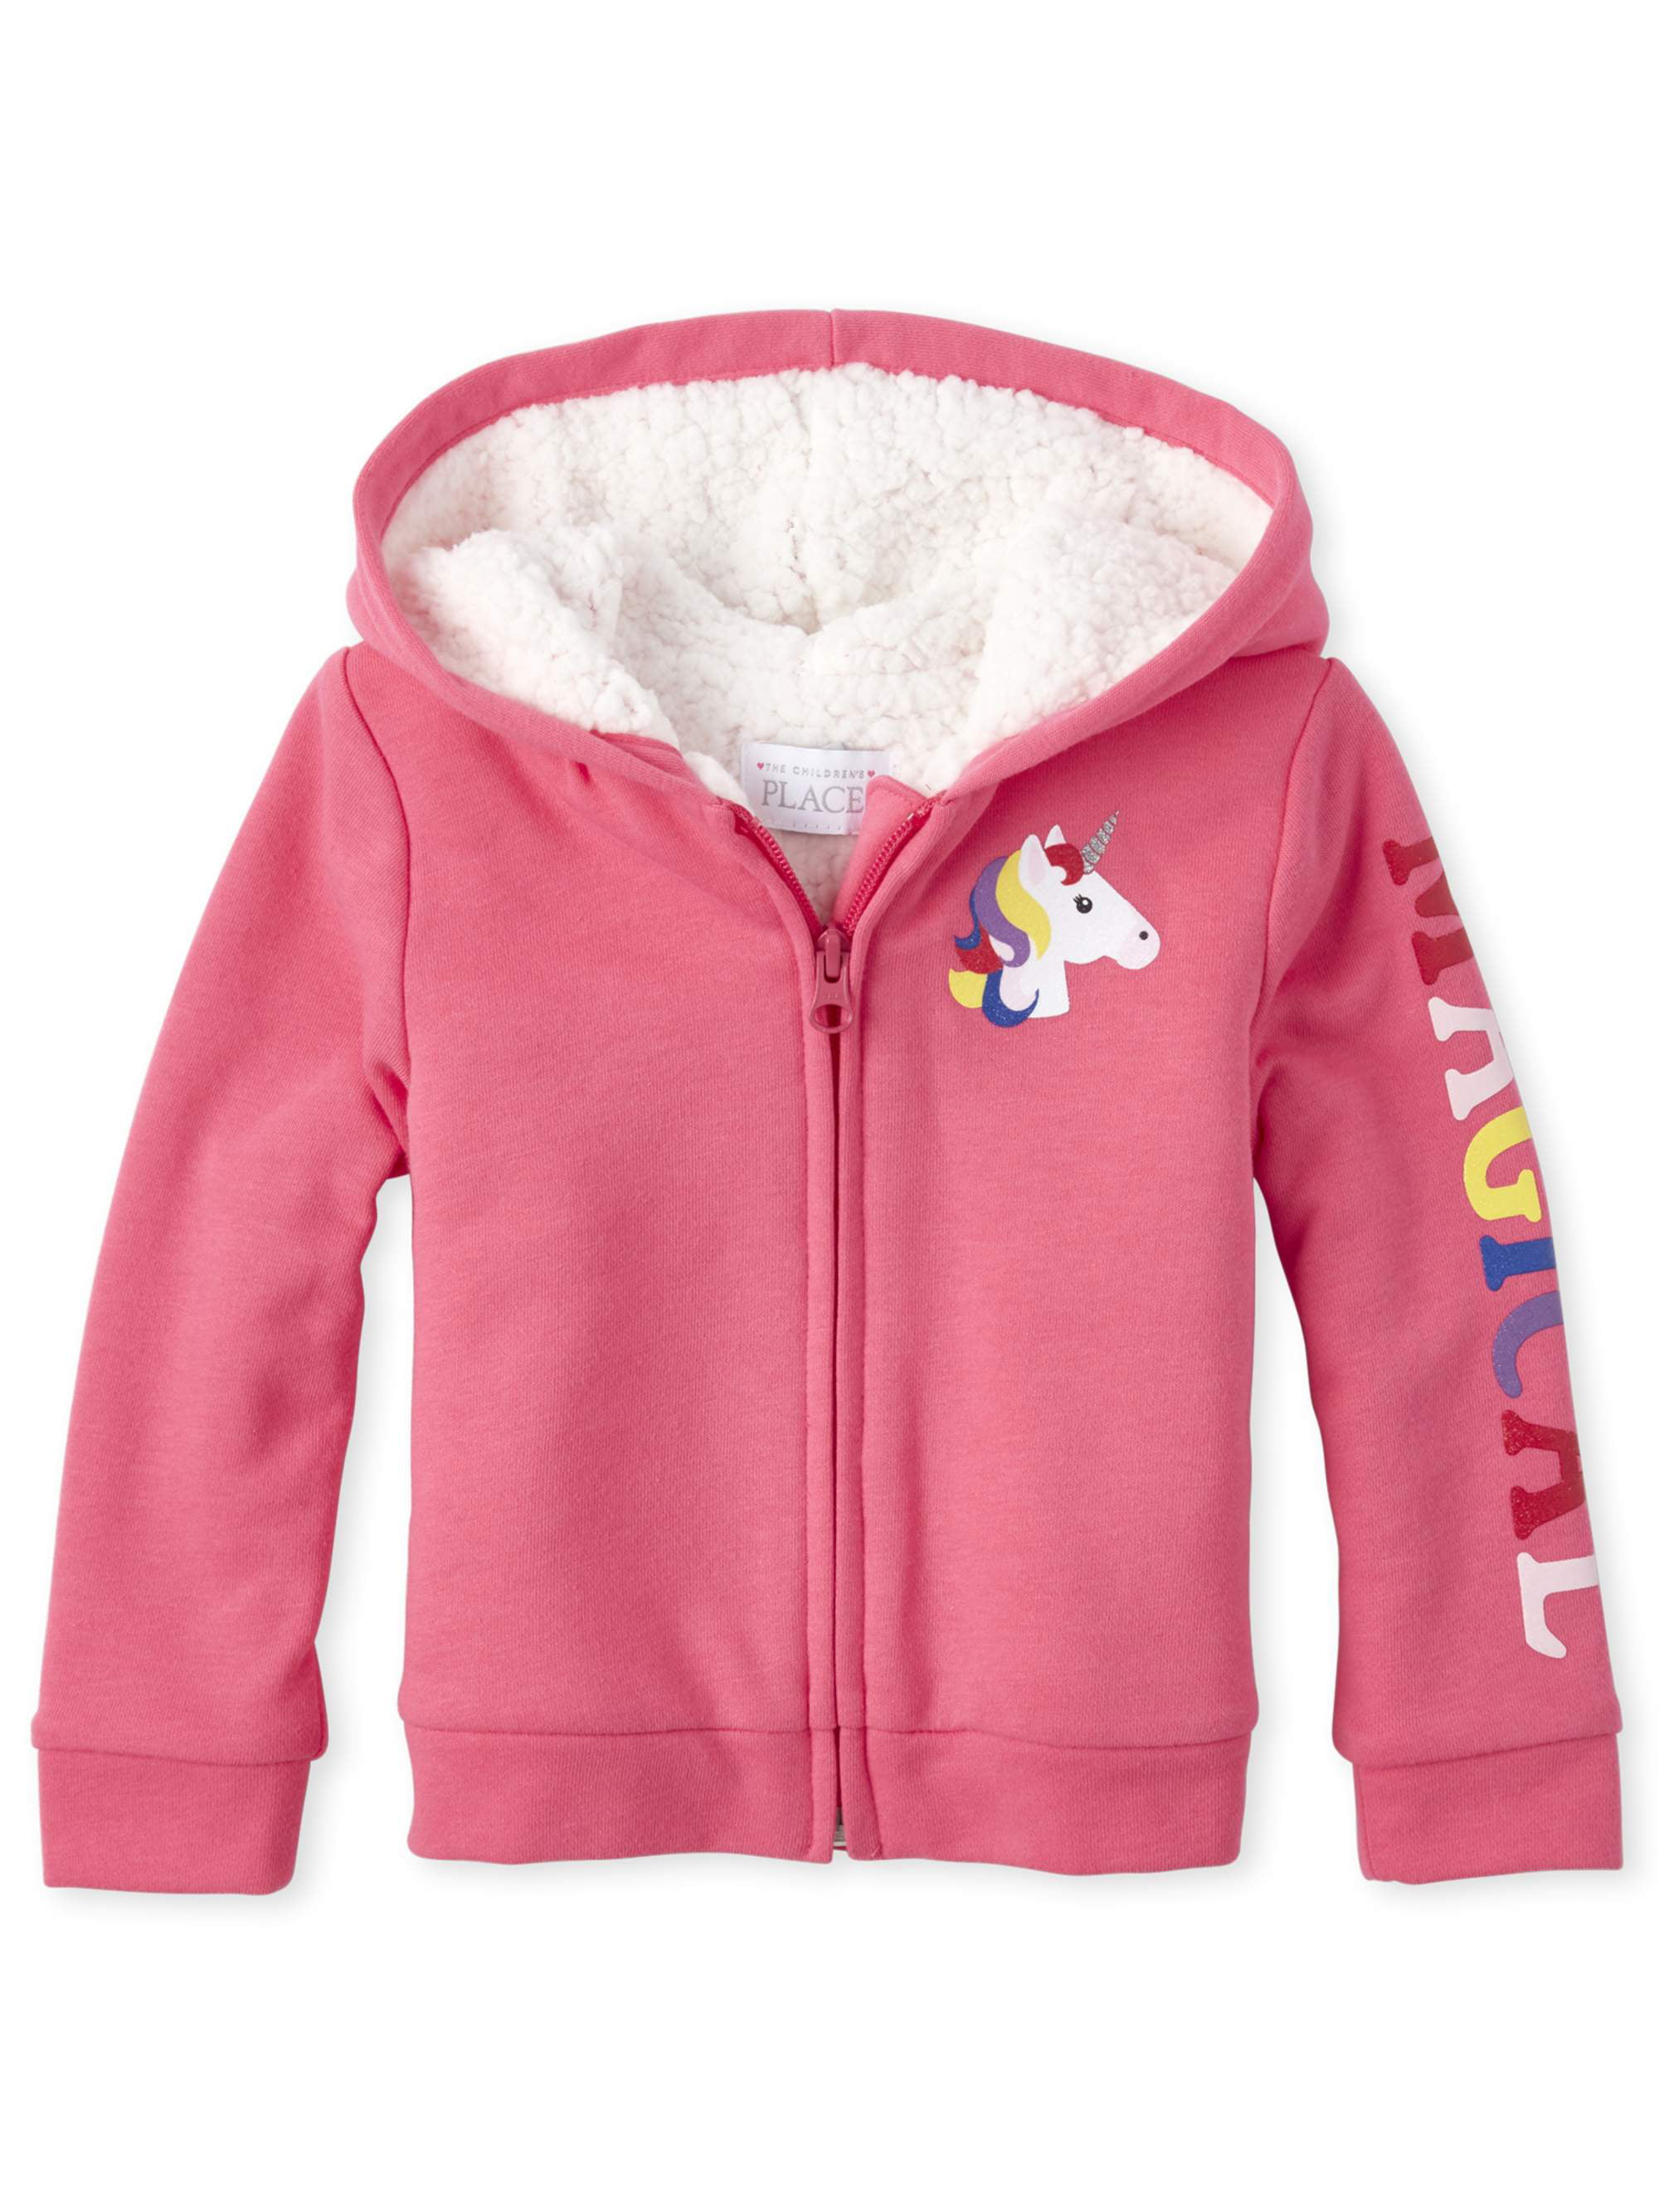 Toddler Unicorn Hoodie Zip Up Cute Jackets for Baby Girls Outdoor Cartoon Hooded Sweatshirt for Kids